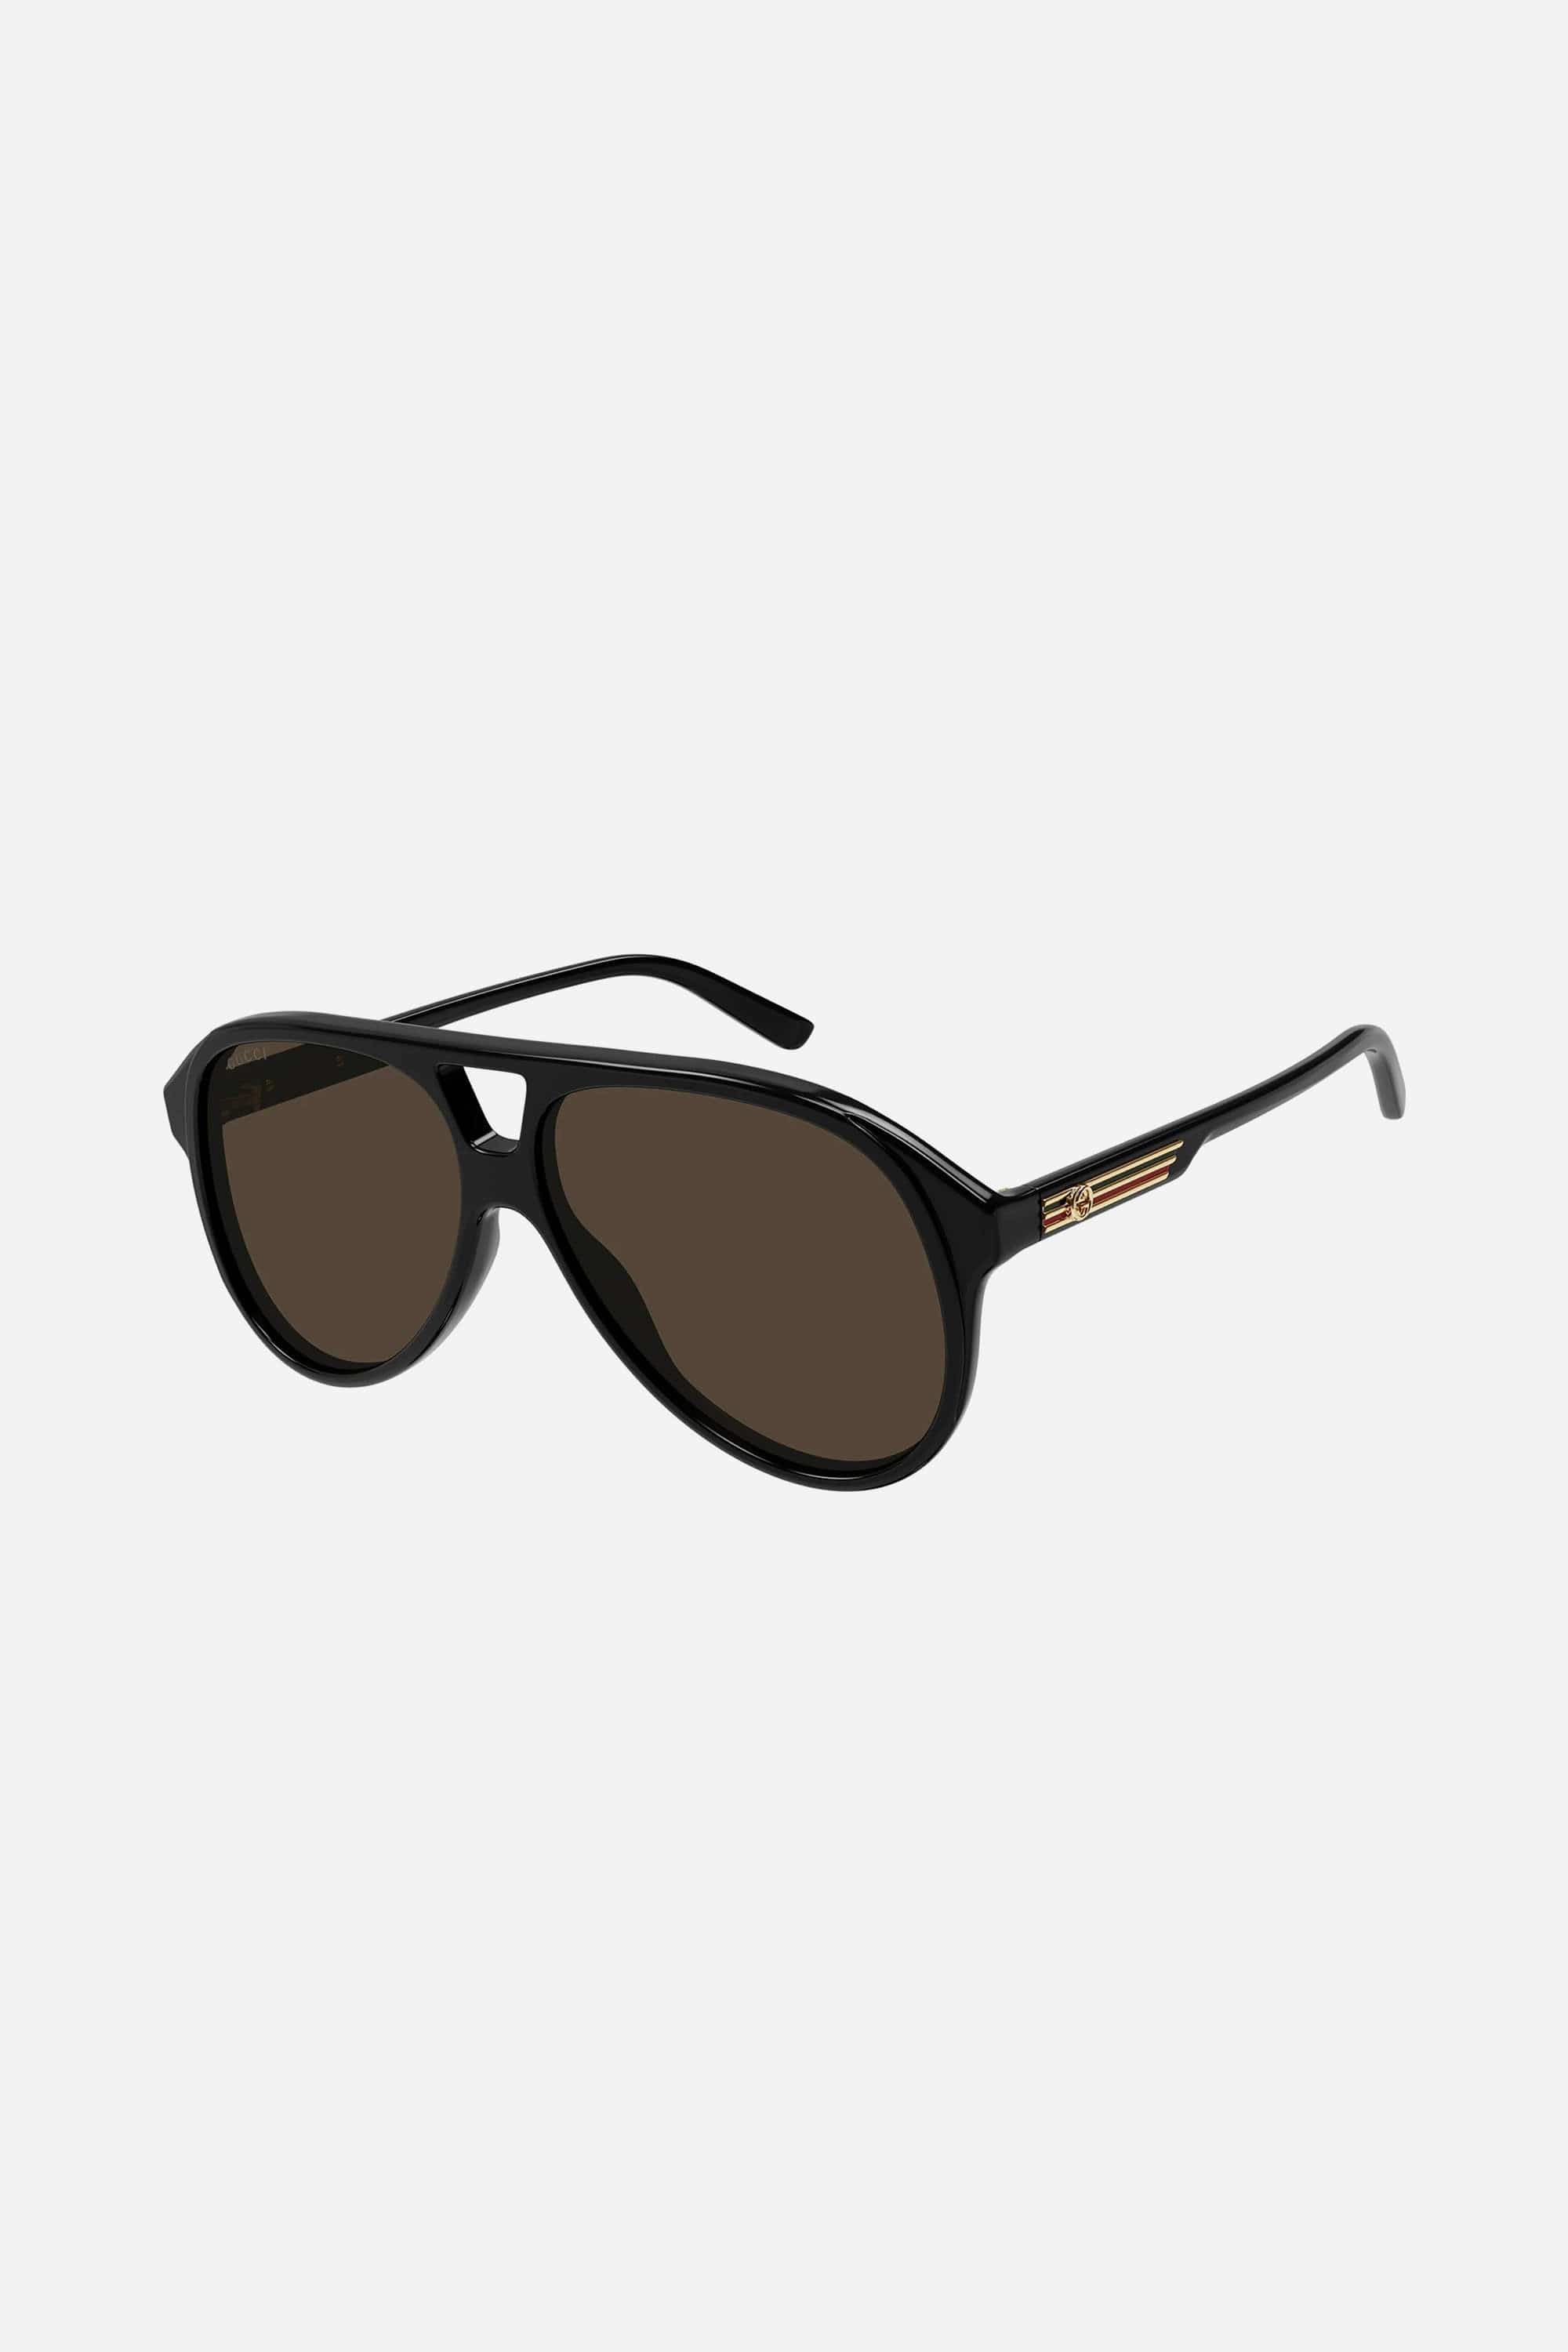 Gucci acetate pilot shade with GG logo - Eyewear Club